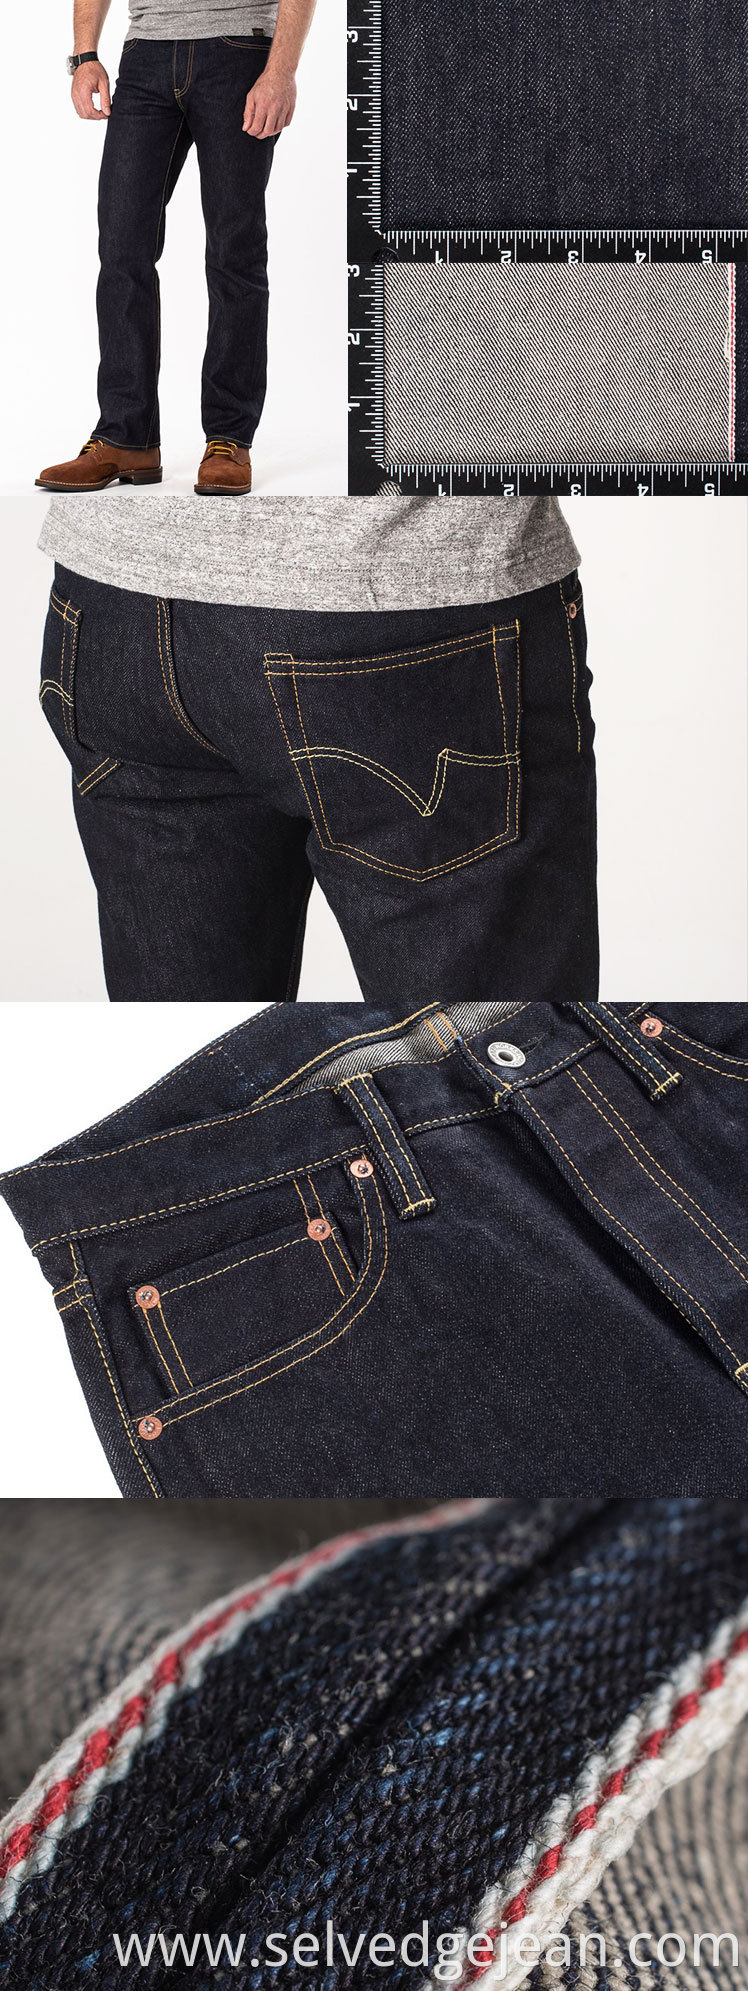 selvedge fabric 17oz slim price of blank denim jeans wholesale stock lot in bangladesh